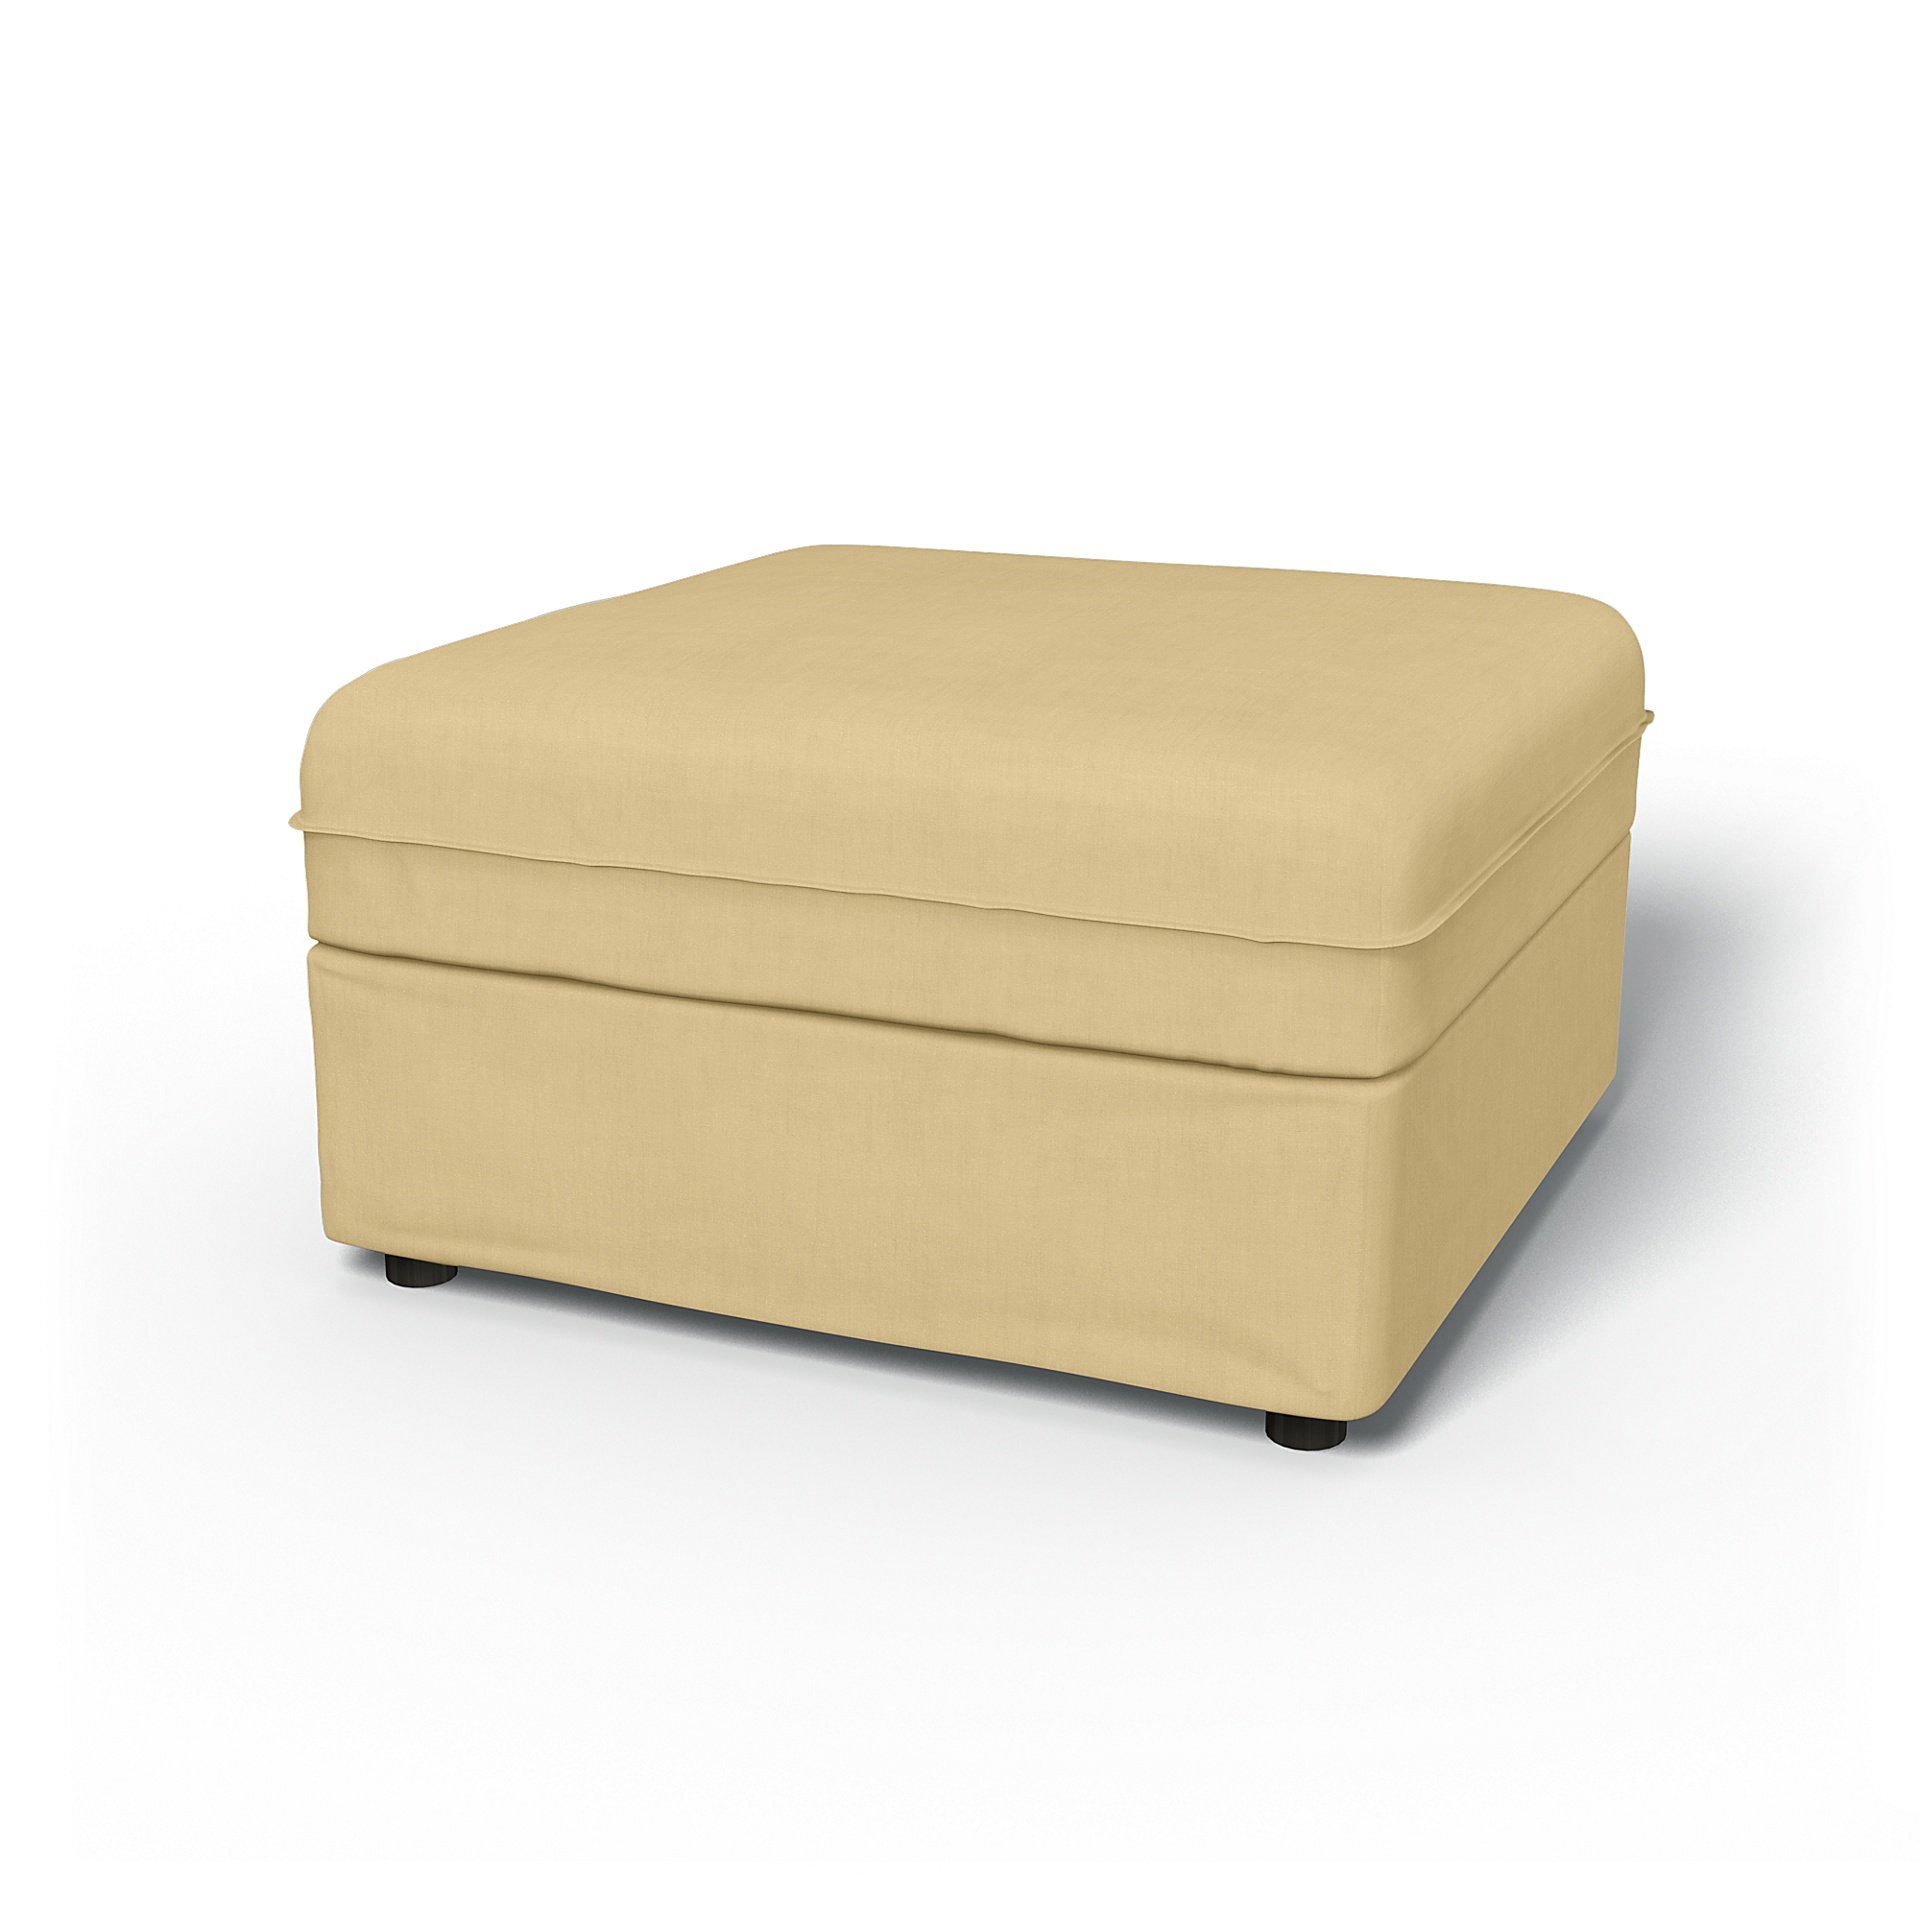 IKEA - Vallentuna Seat Module with Storage Cover 80x80cm 32x32in, Straw Yellow, Linen - Bemz